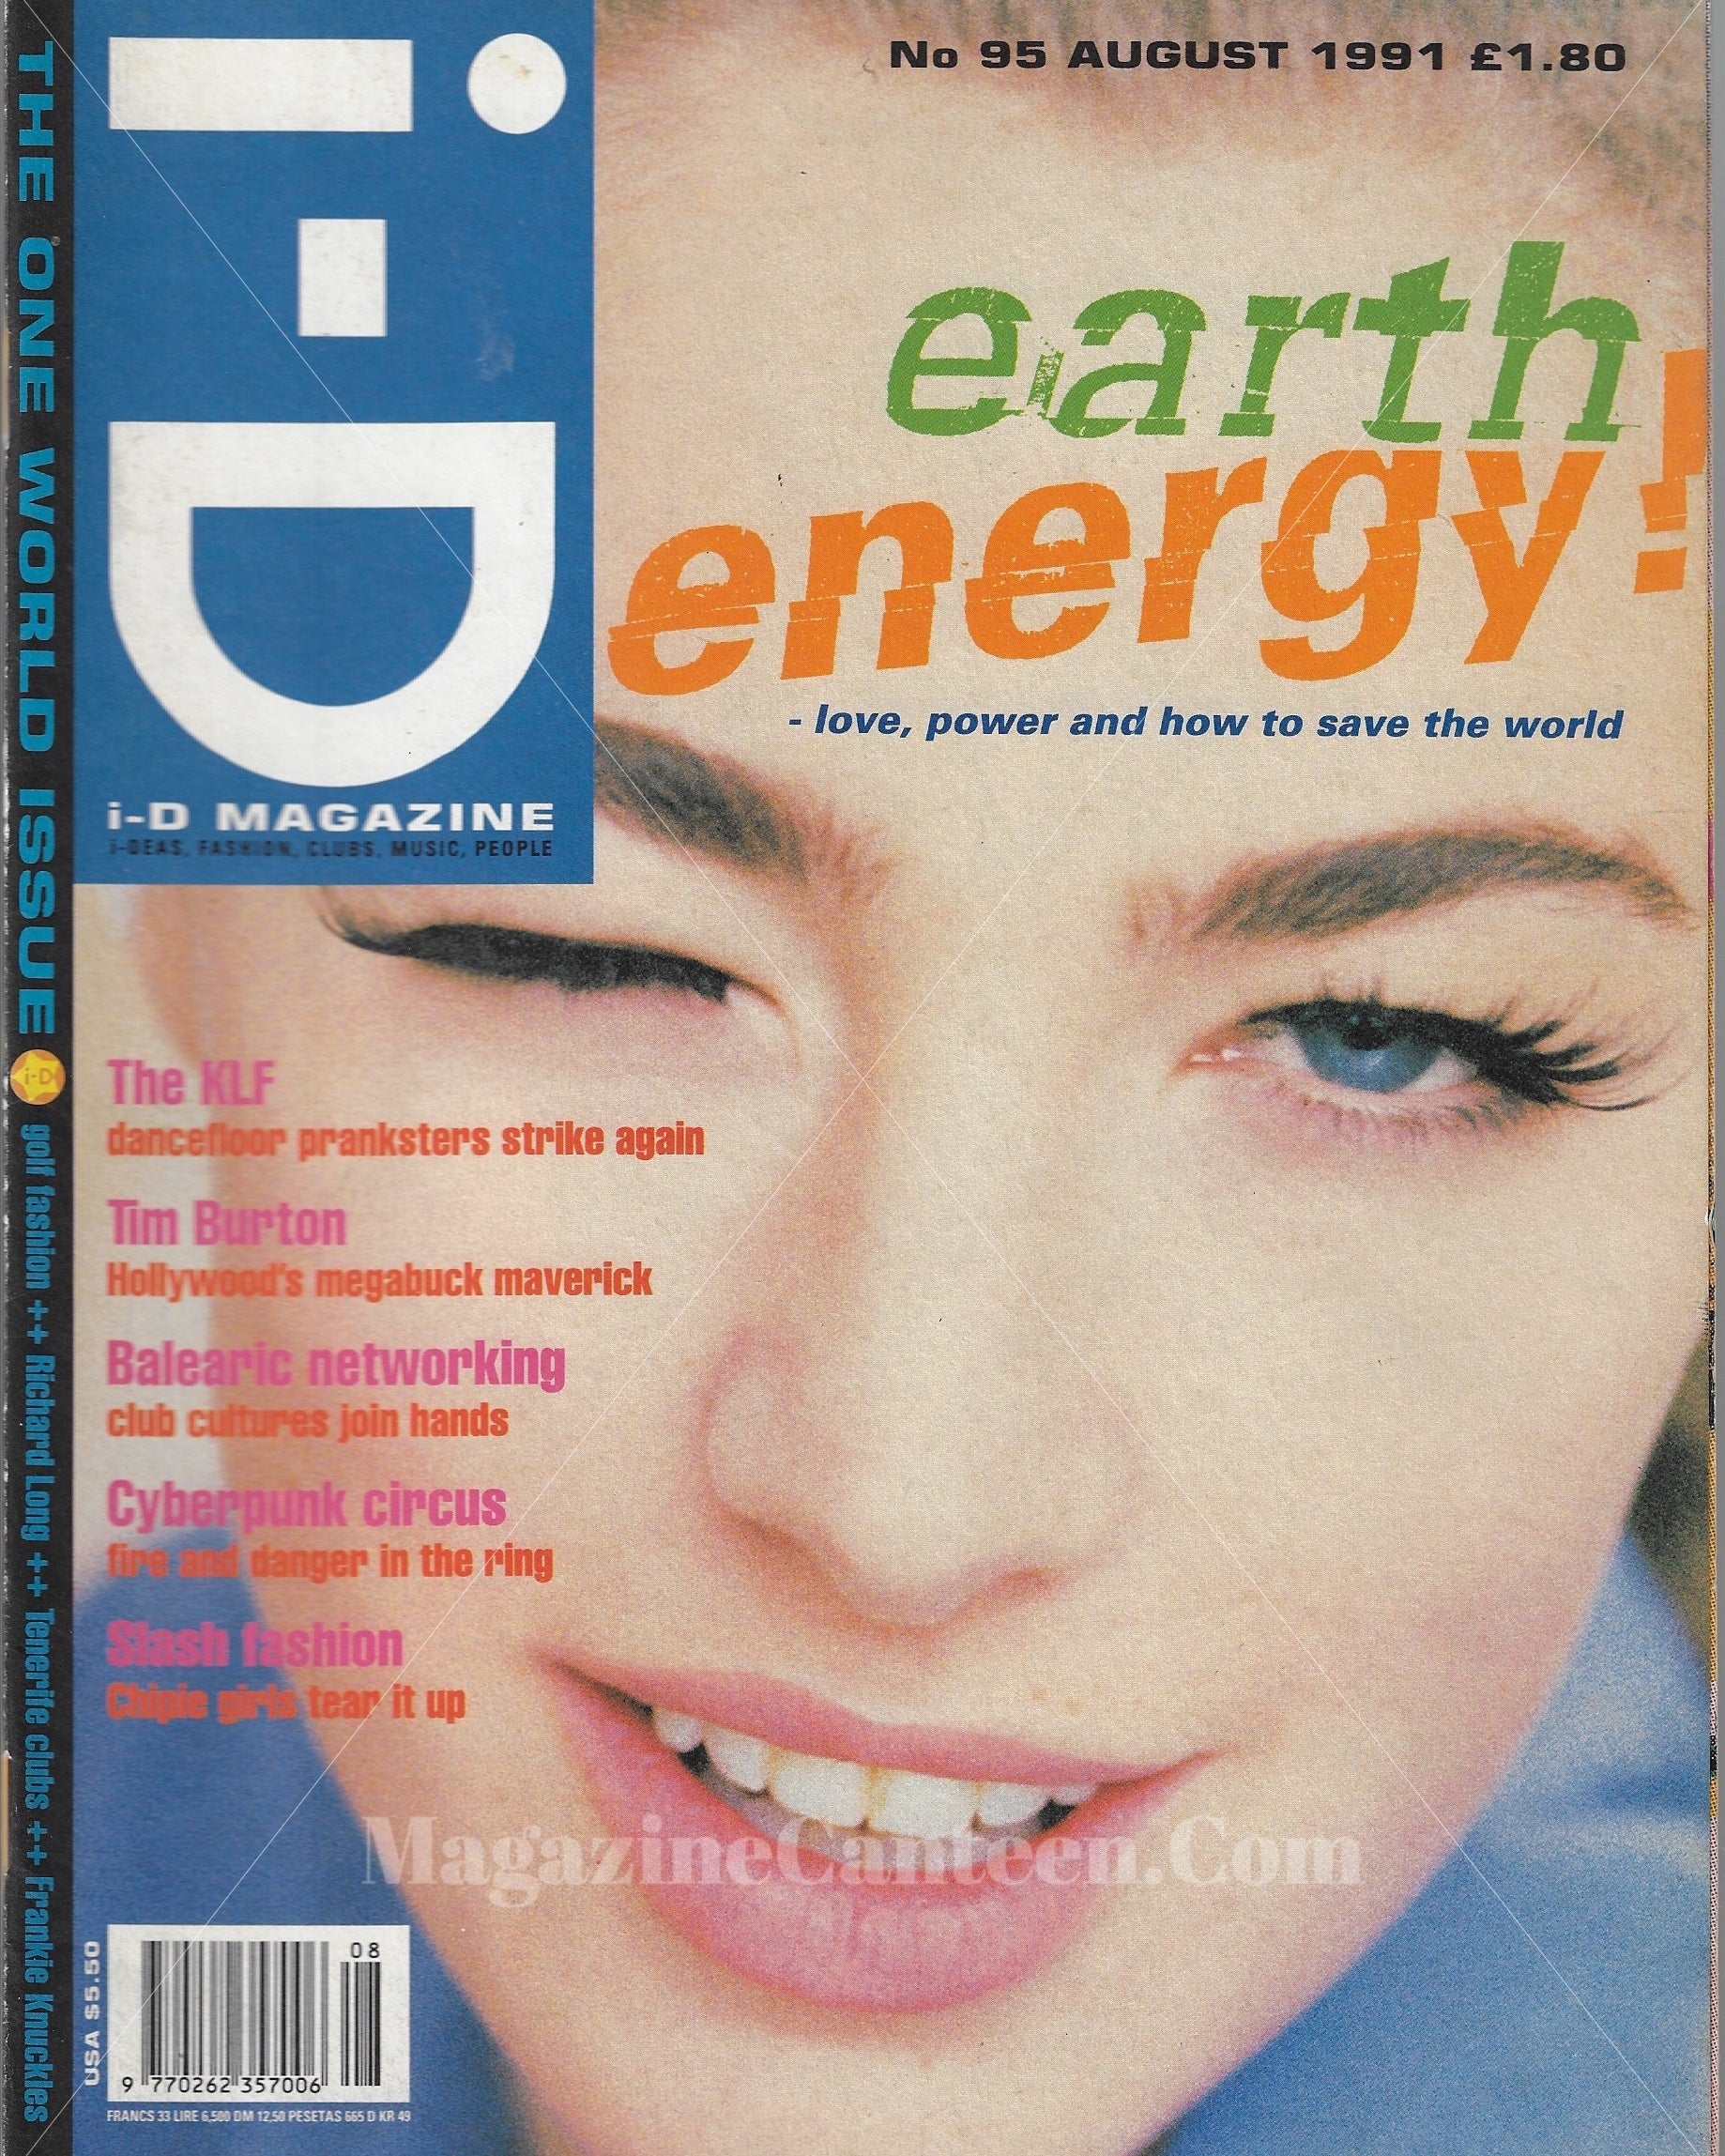 I-D Magazine 95 - Elaine Irwin 1991